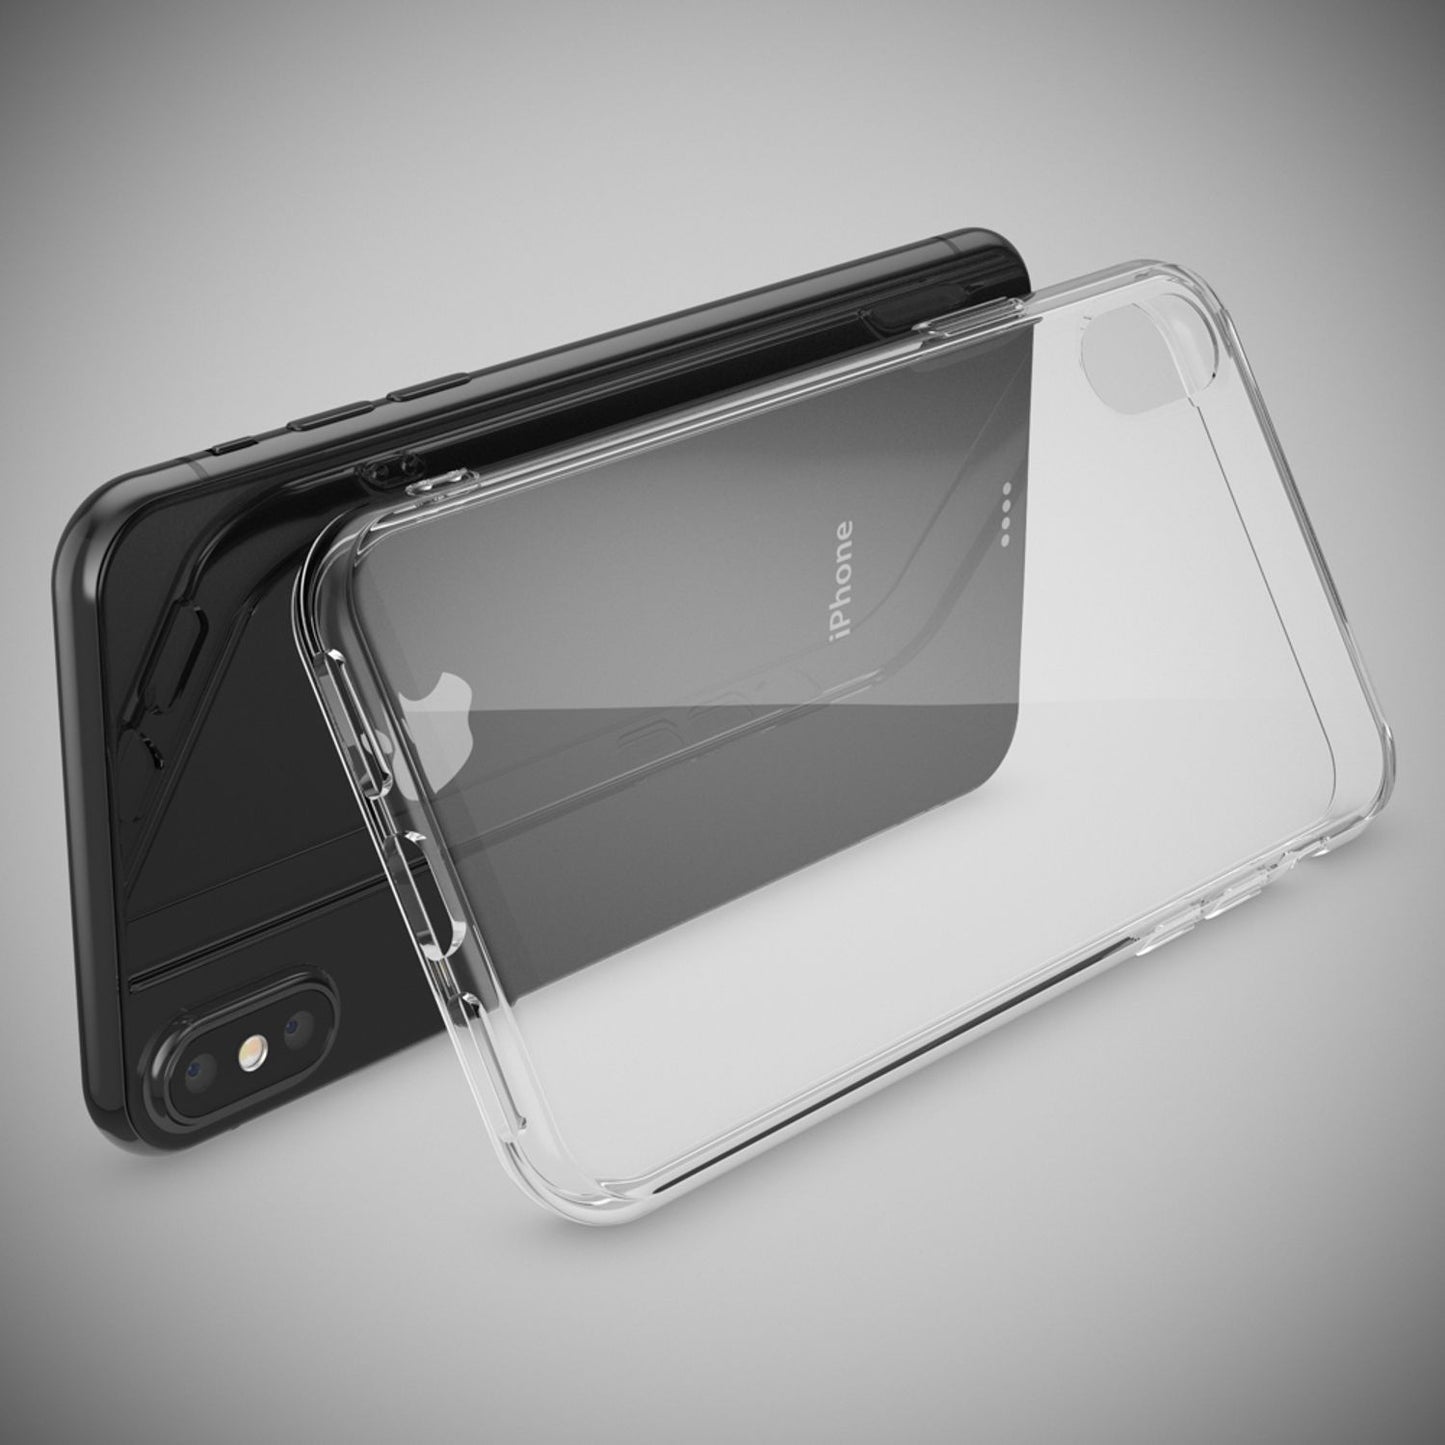 NALIA Handyhülle für Apple iPhone XS Max Hülle, Dünne Silikon Schutzhülle Case